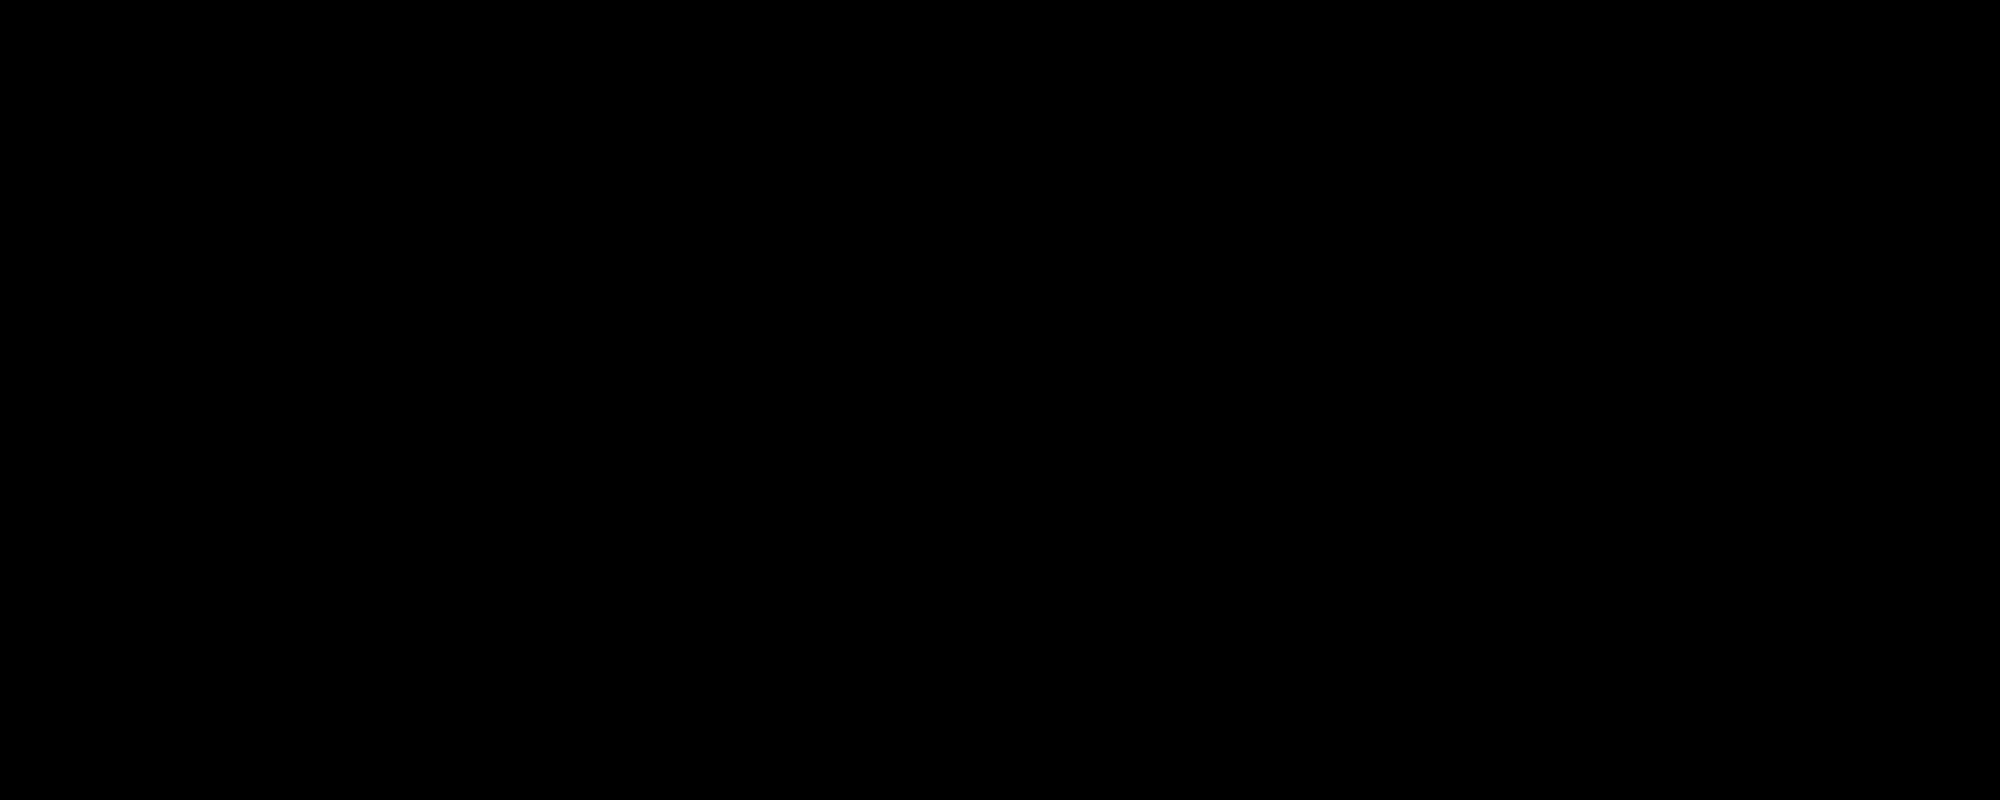 The Atom animated logo